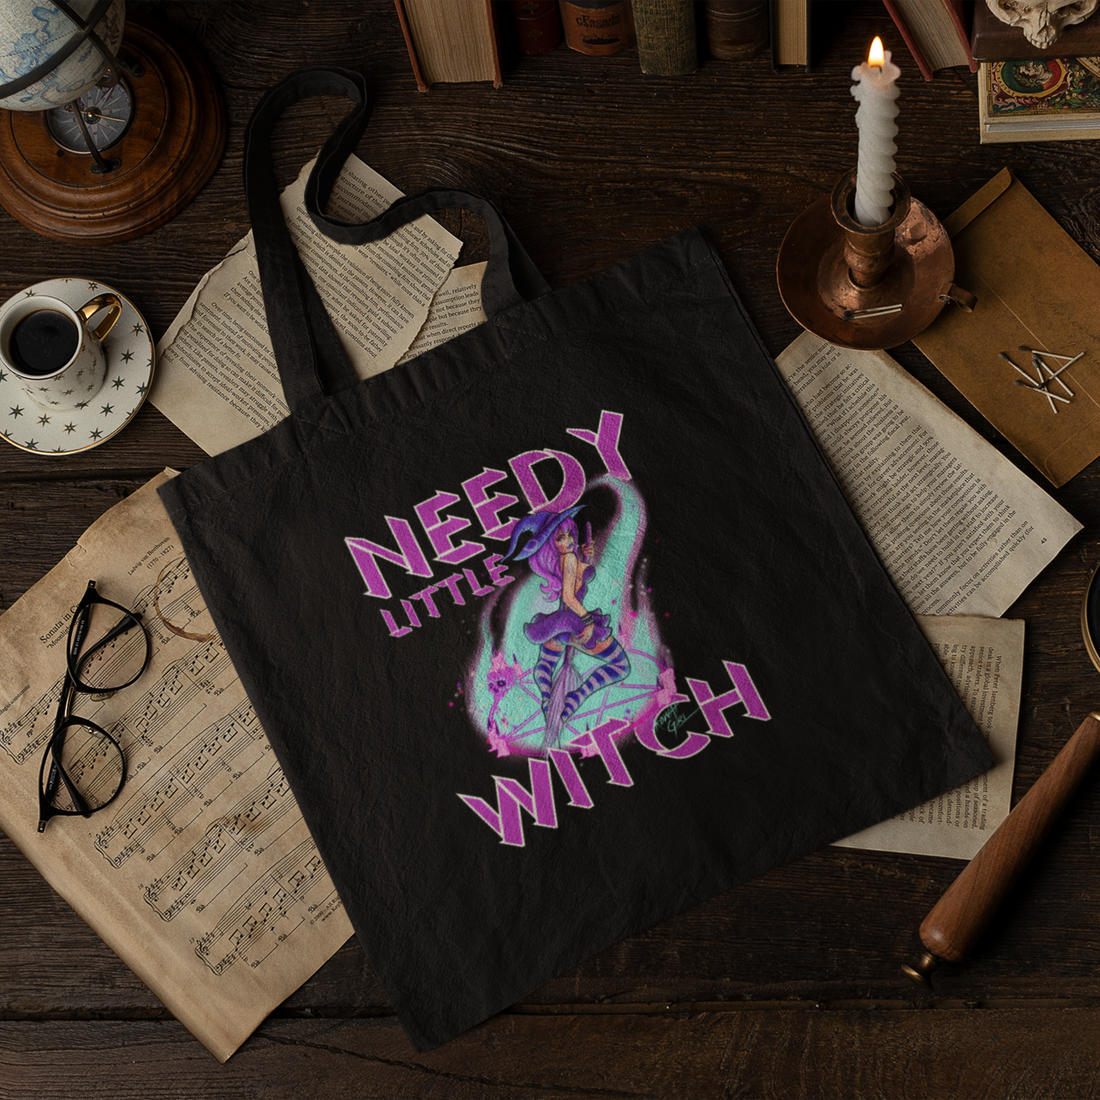 Needy Little Witch